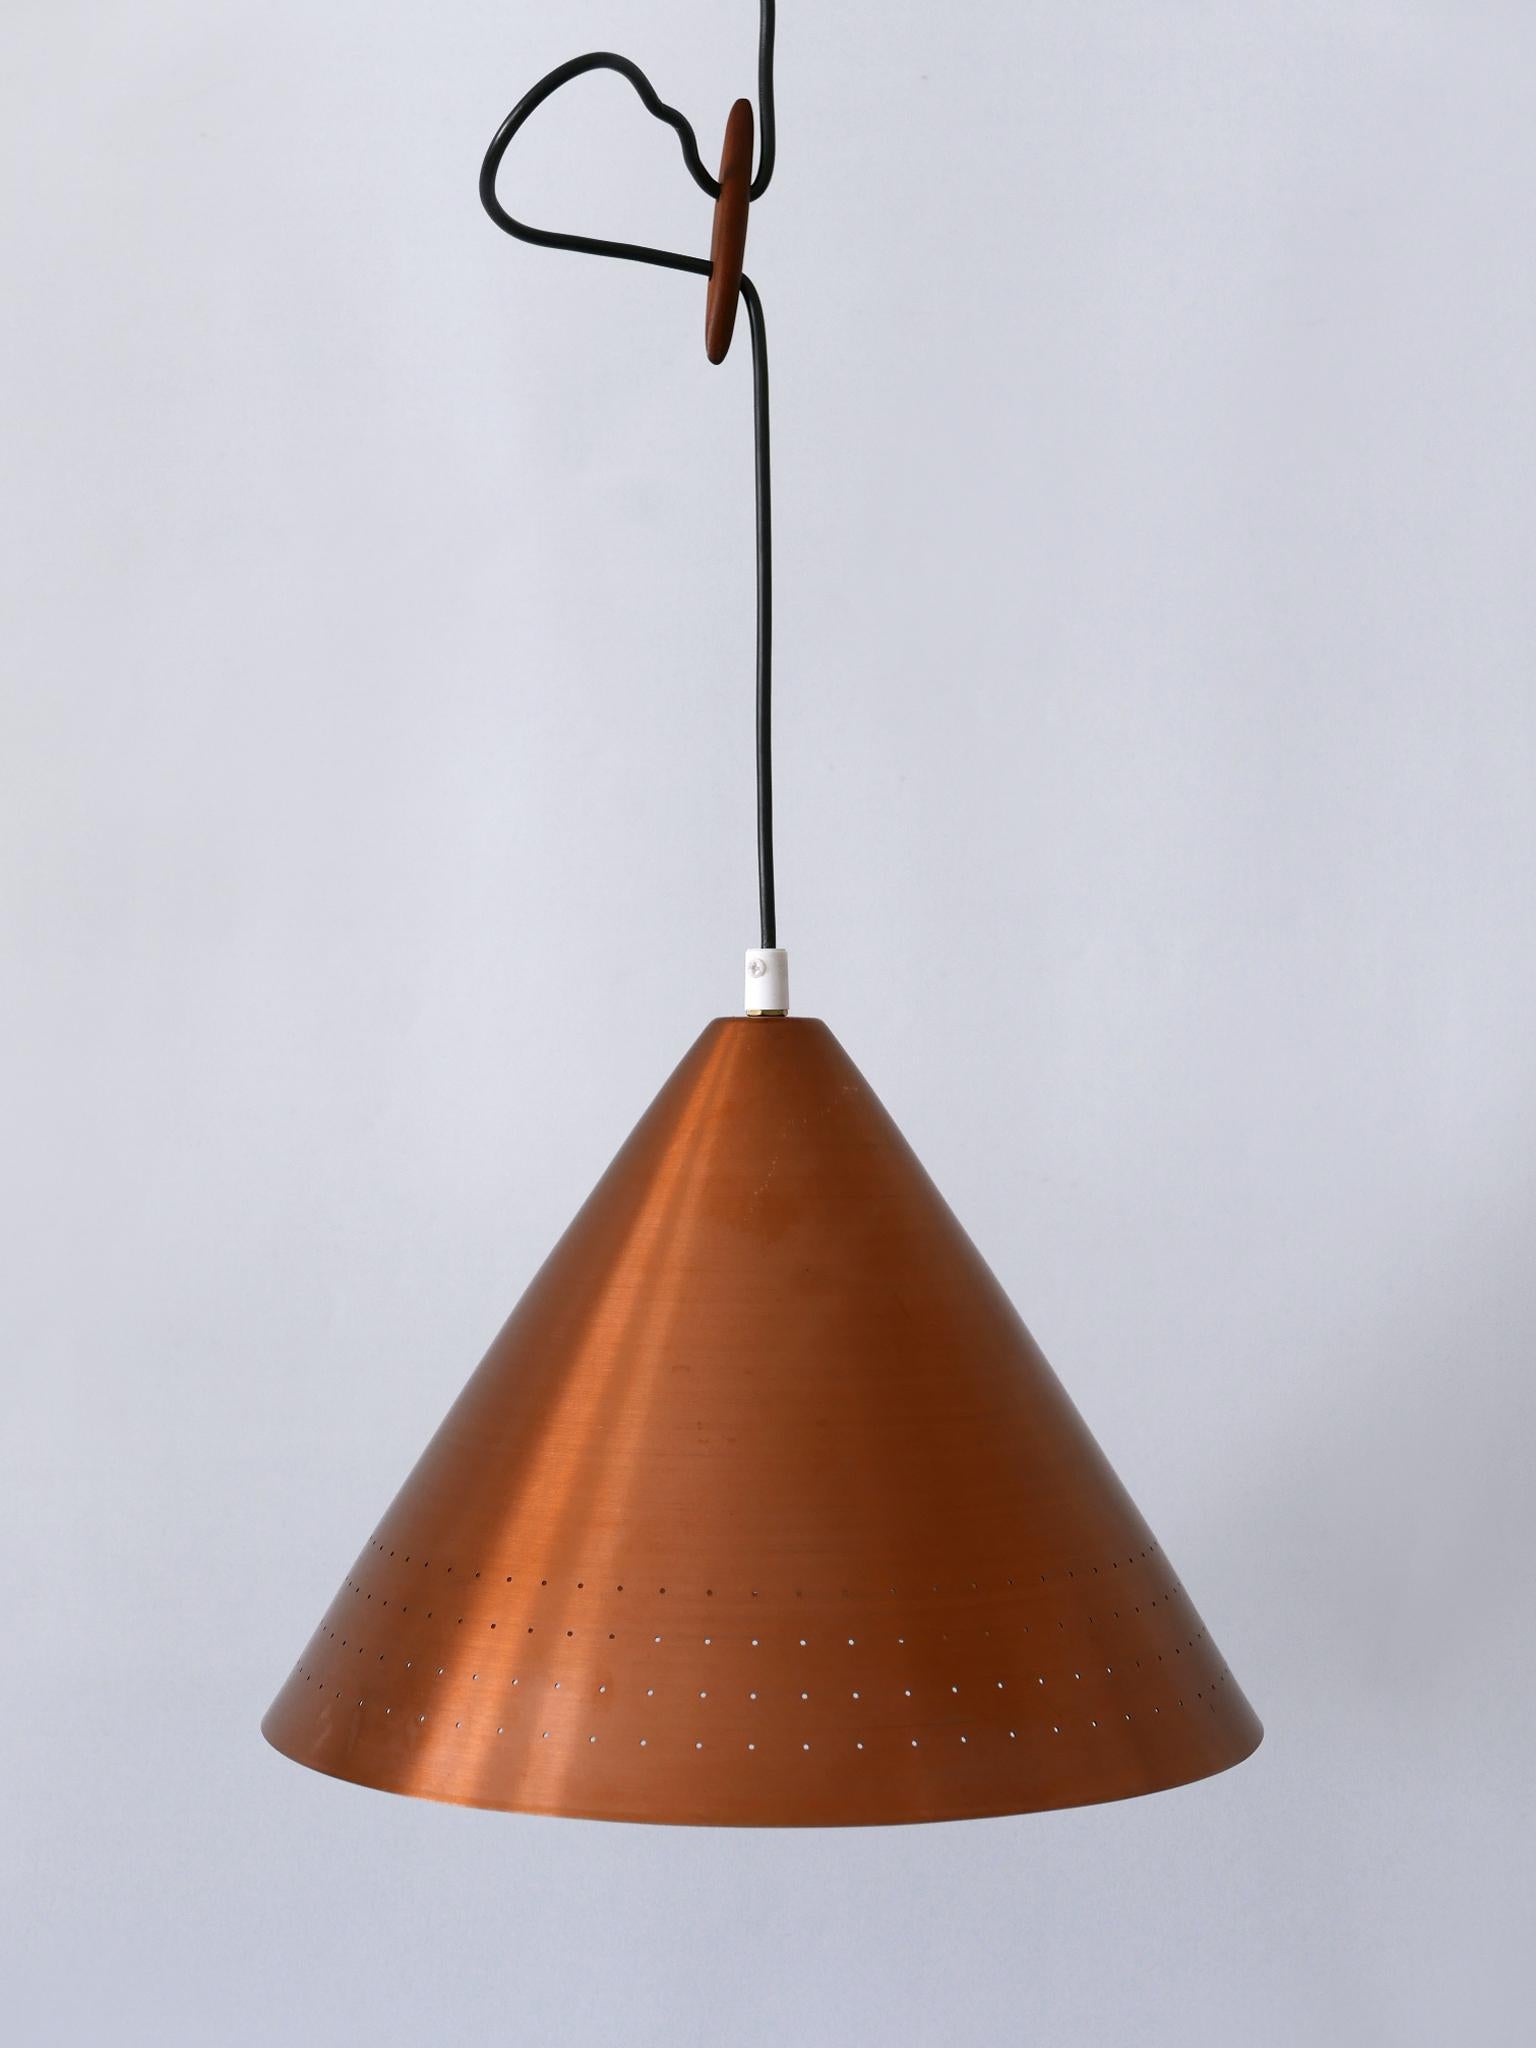 Rare Mid-Century Modern Scandinavian Copper Pendant Lamp or Hanging Light  1960s For Sale 1